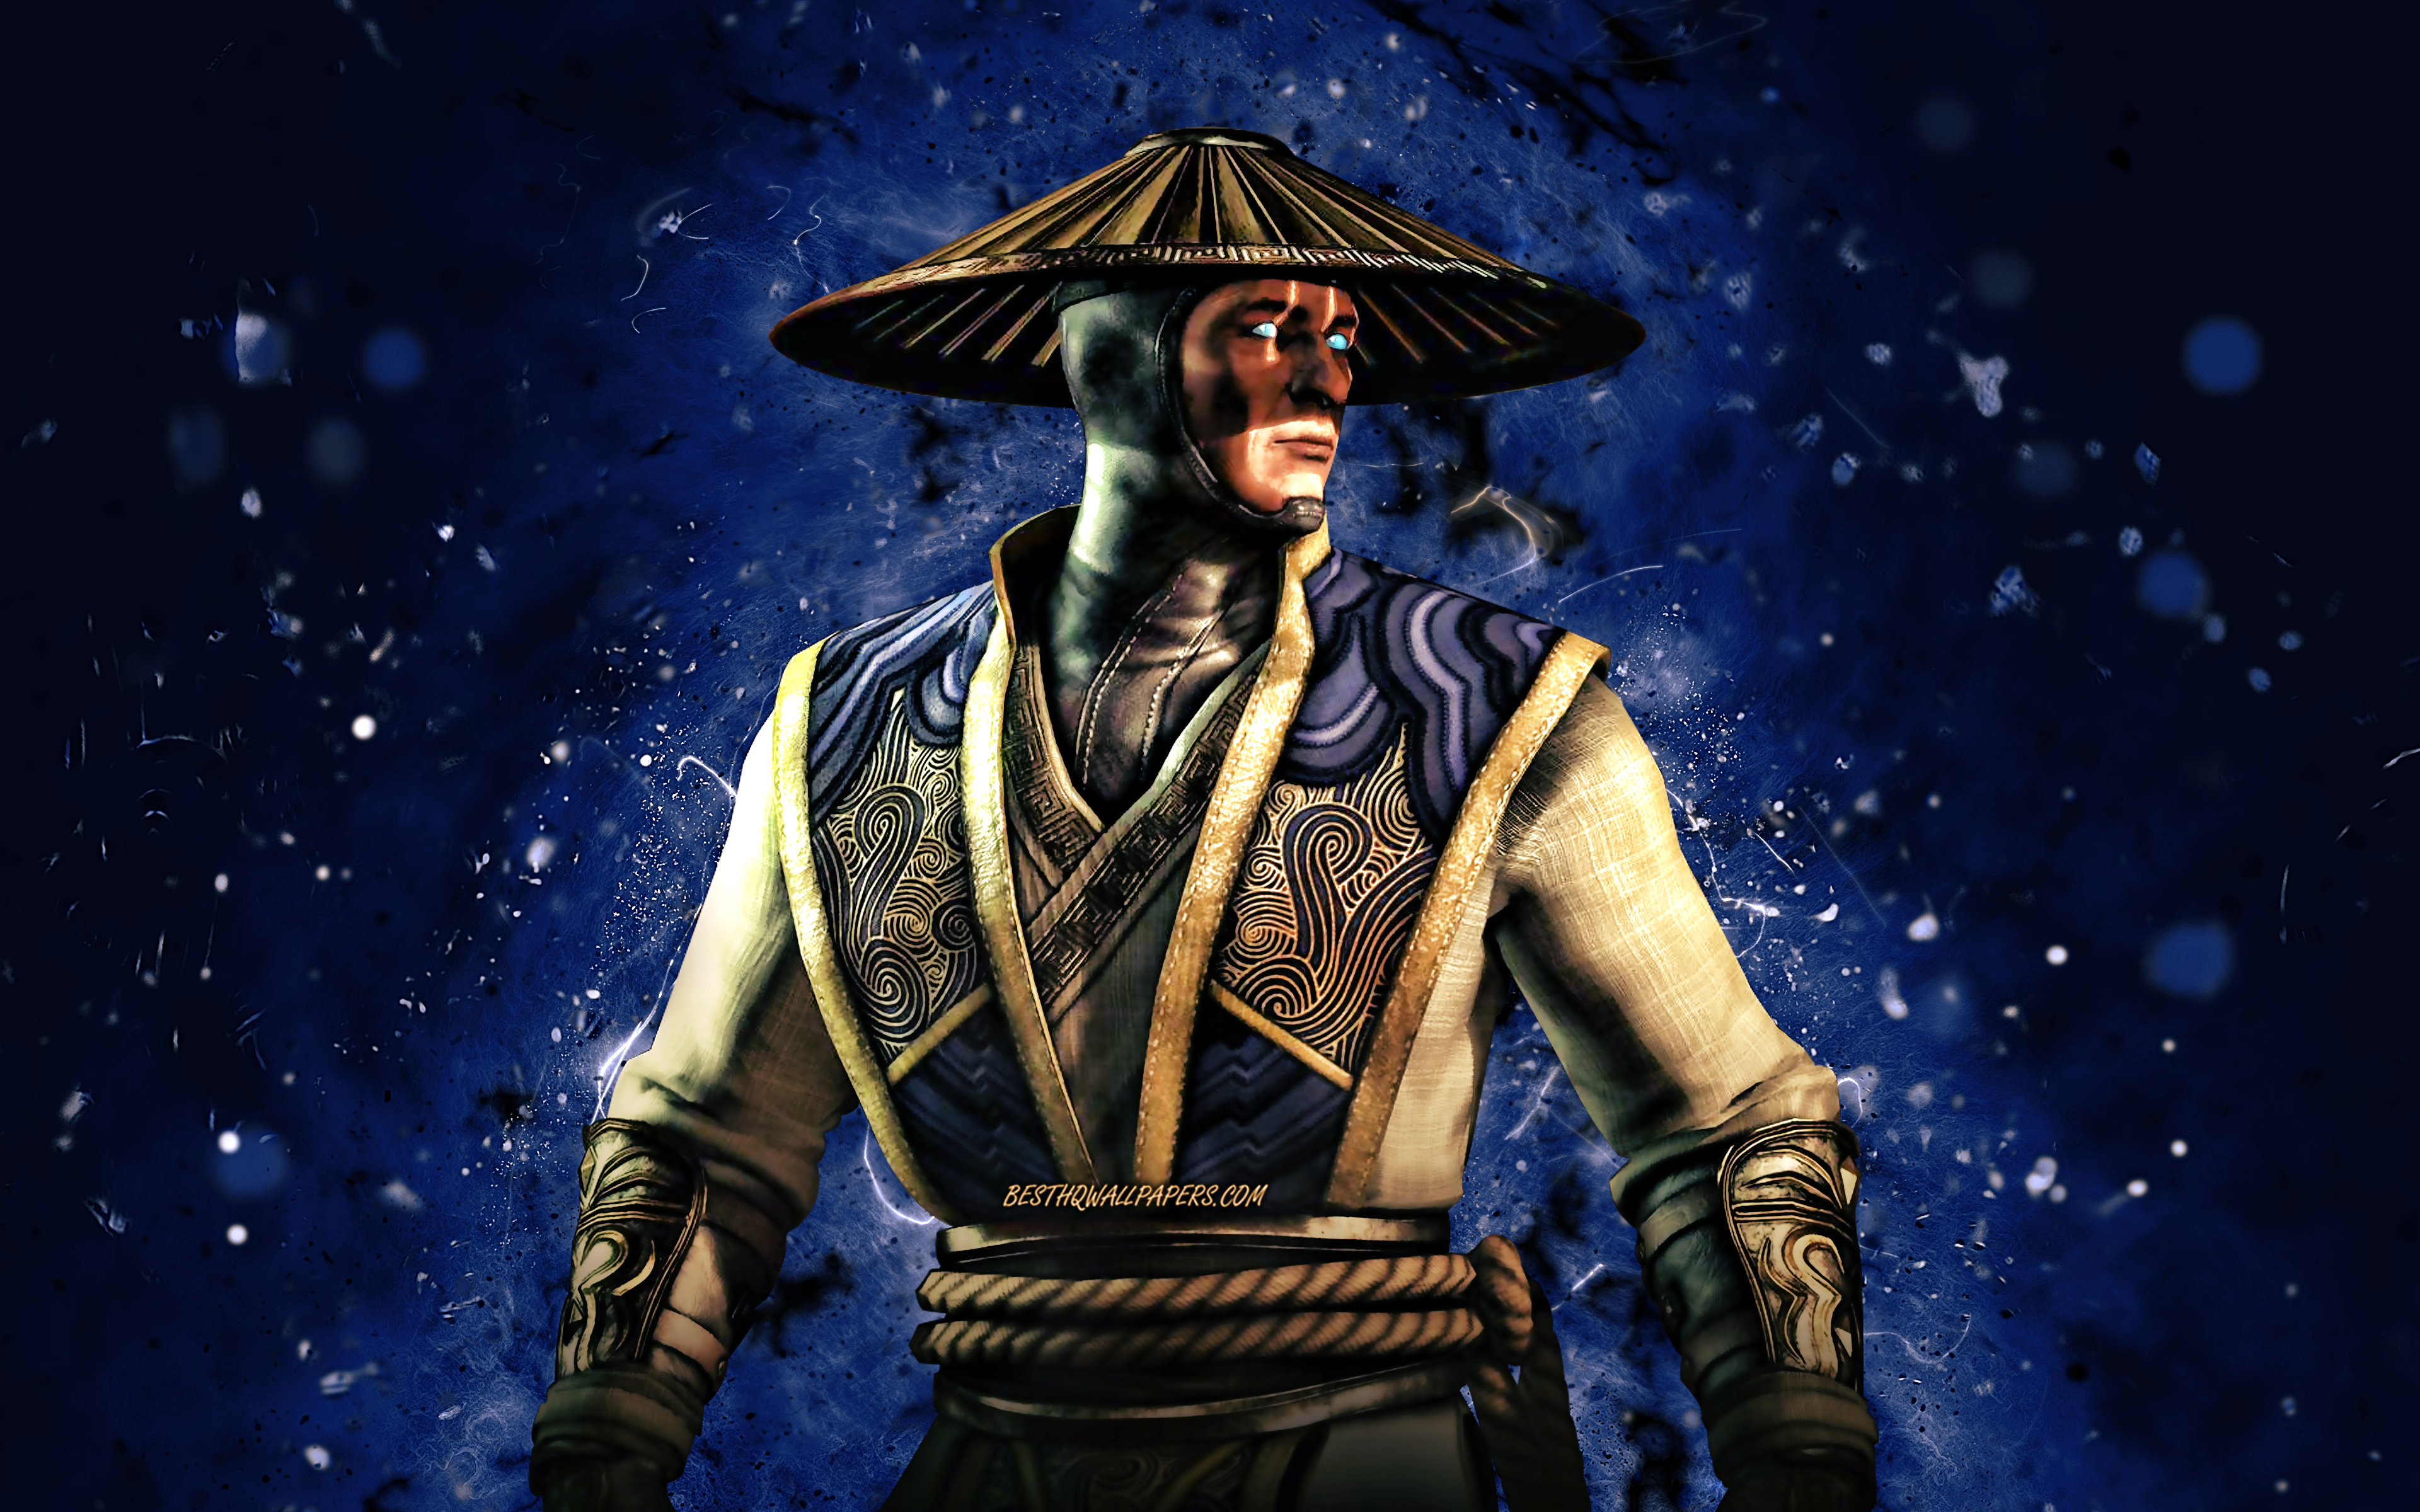 Raiden HD Mortal Kombat 11 Wallpapers  HD Wallpapers  ID 69455